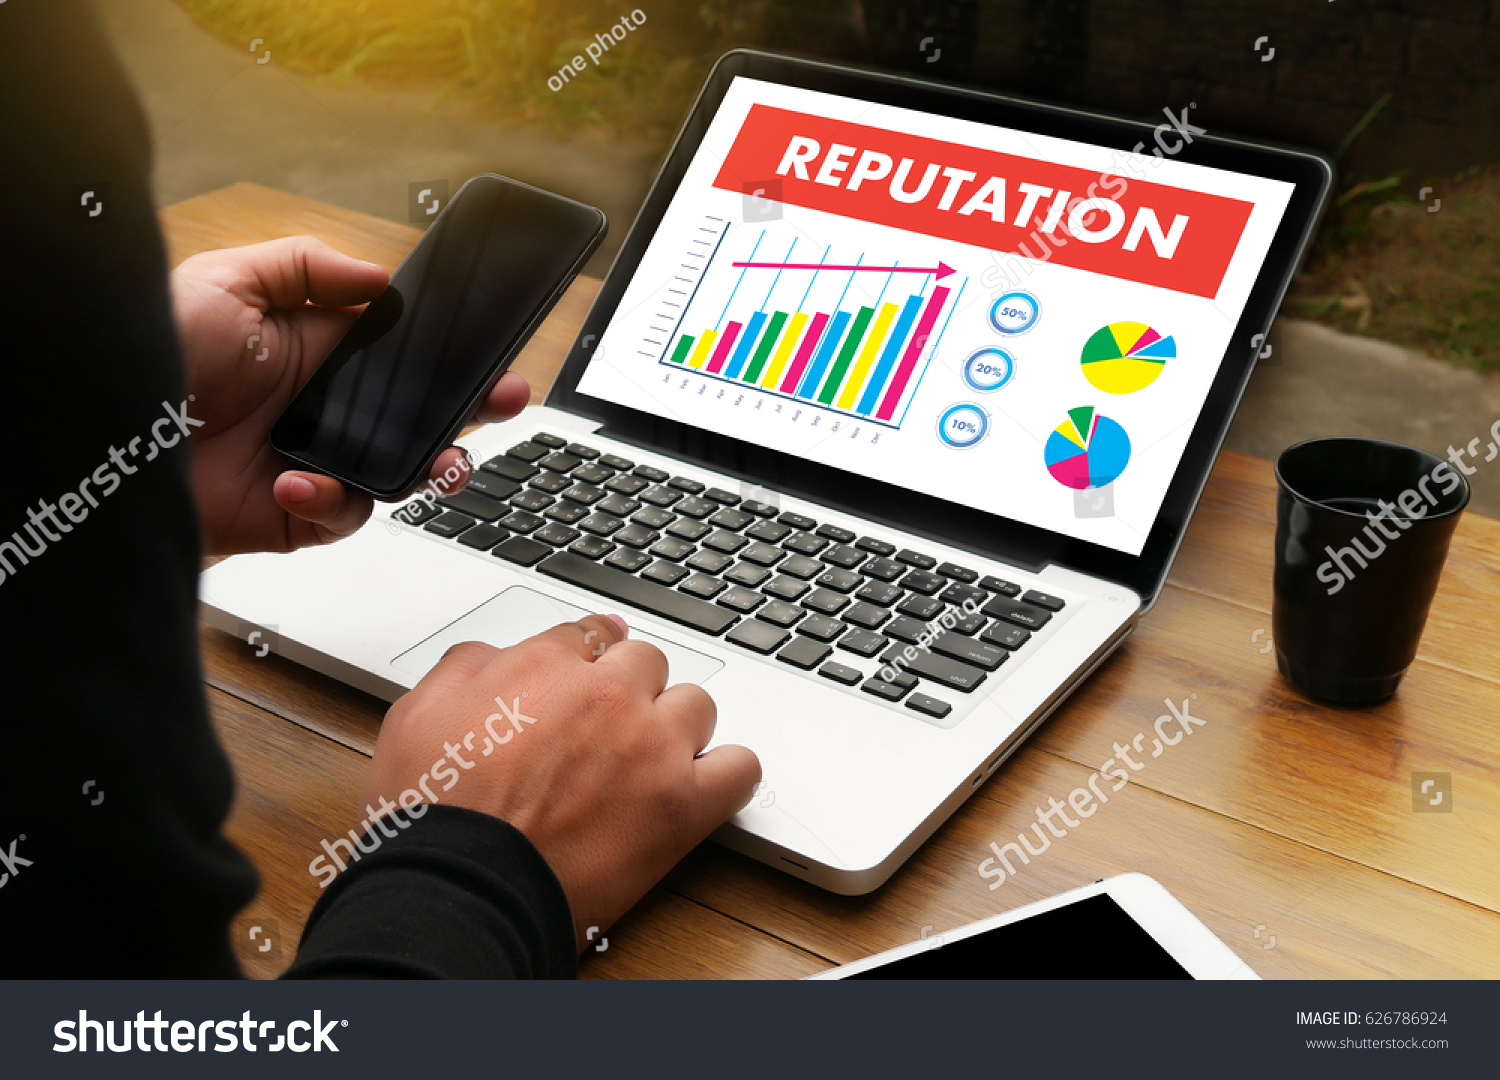 REPUTATION Popular Ranking Honor Reputation management Branding Concept #626786924